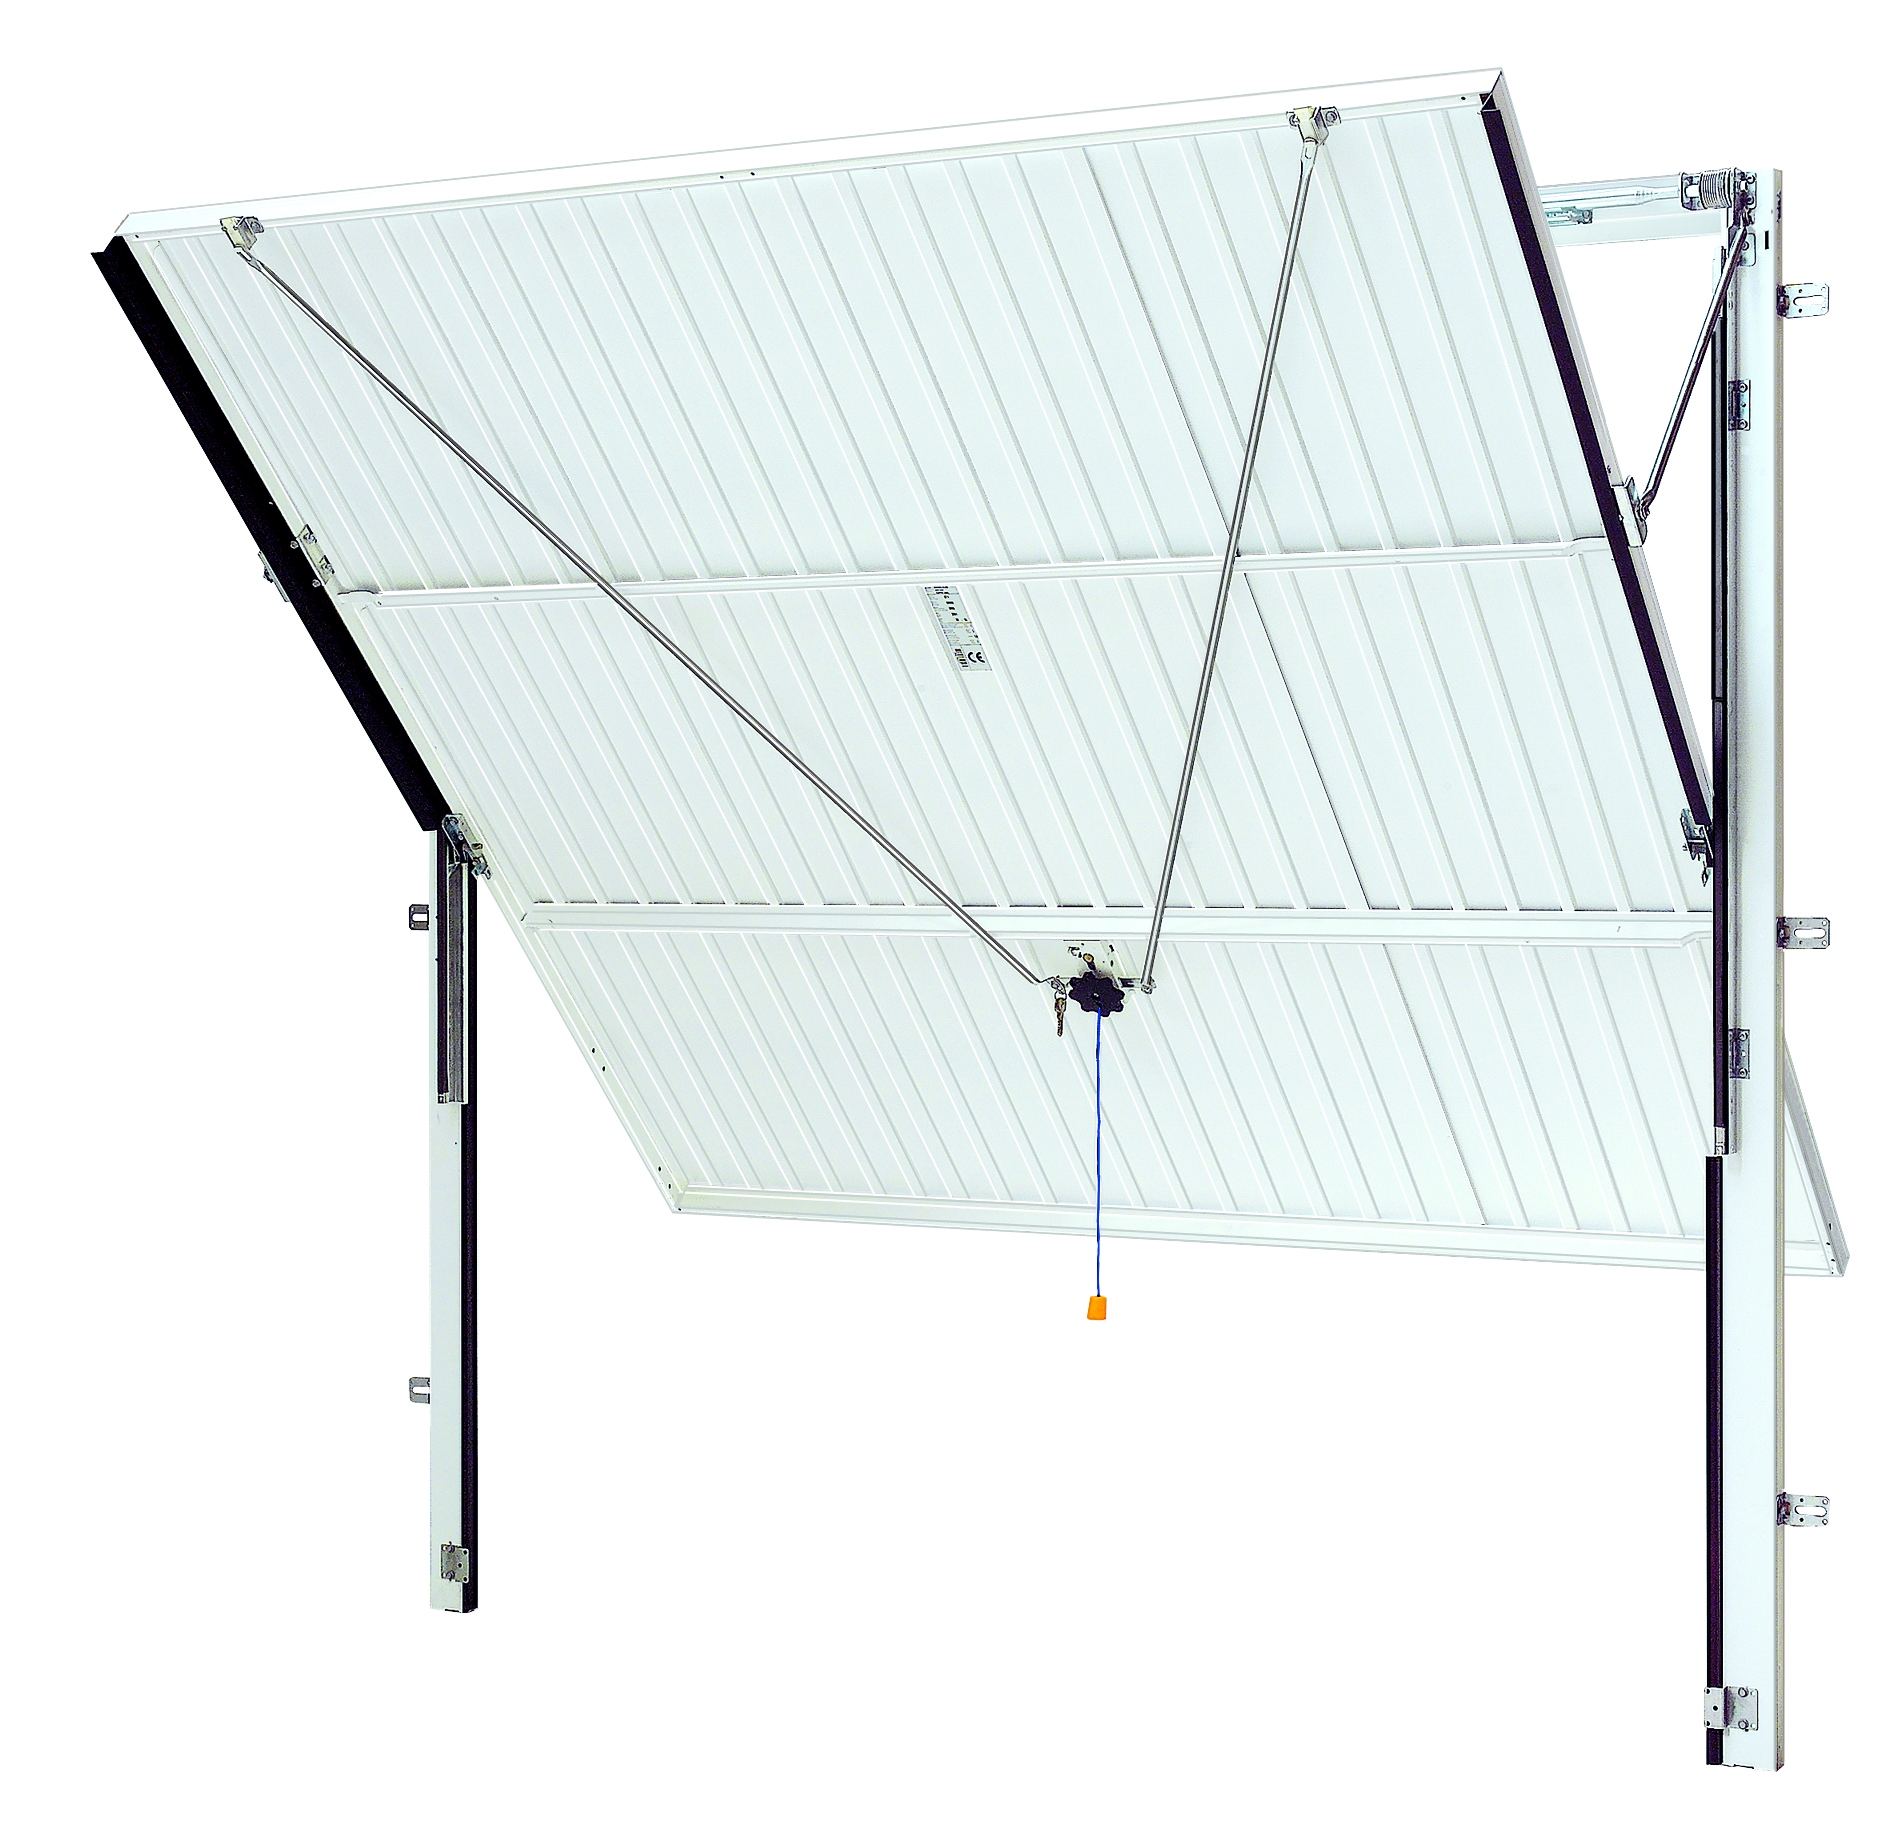 The Hormann vertical canopy door with steel frame